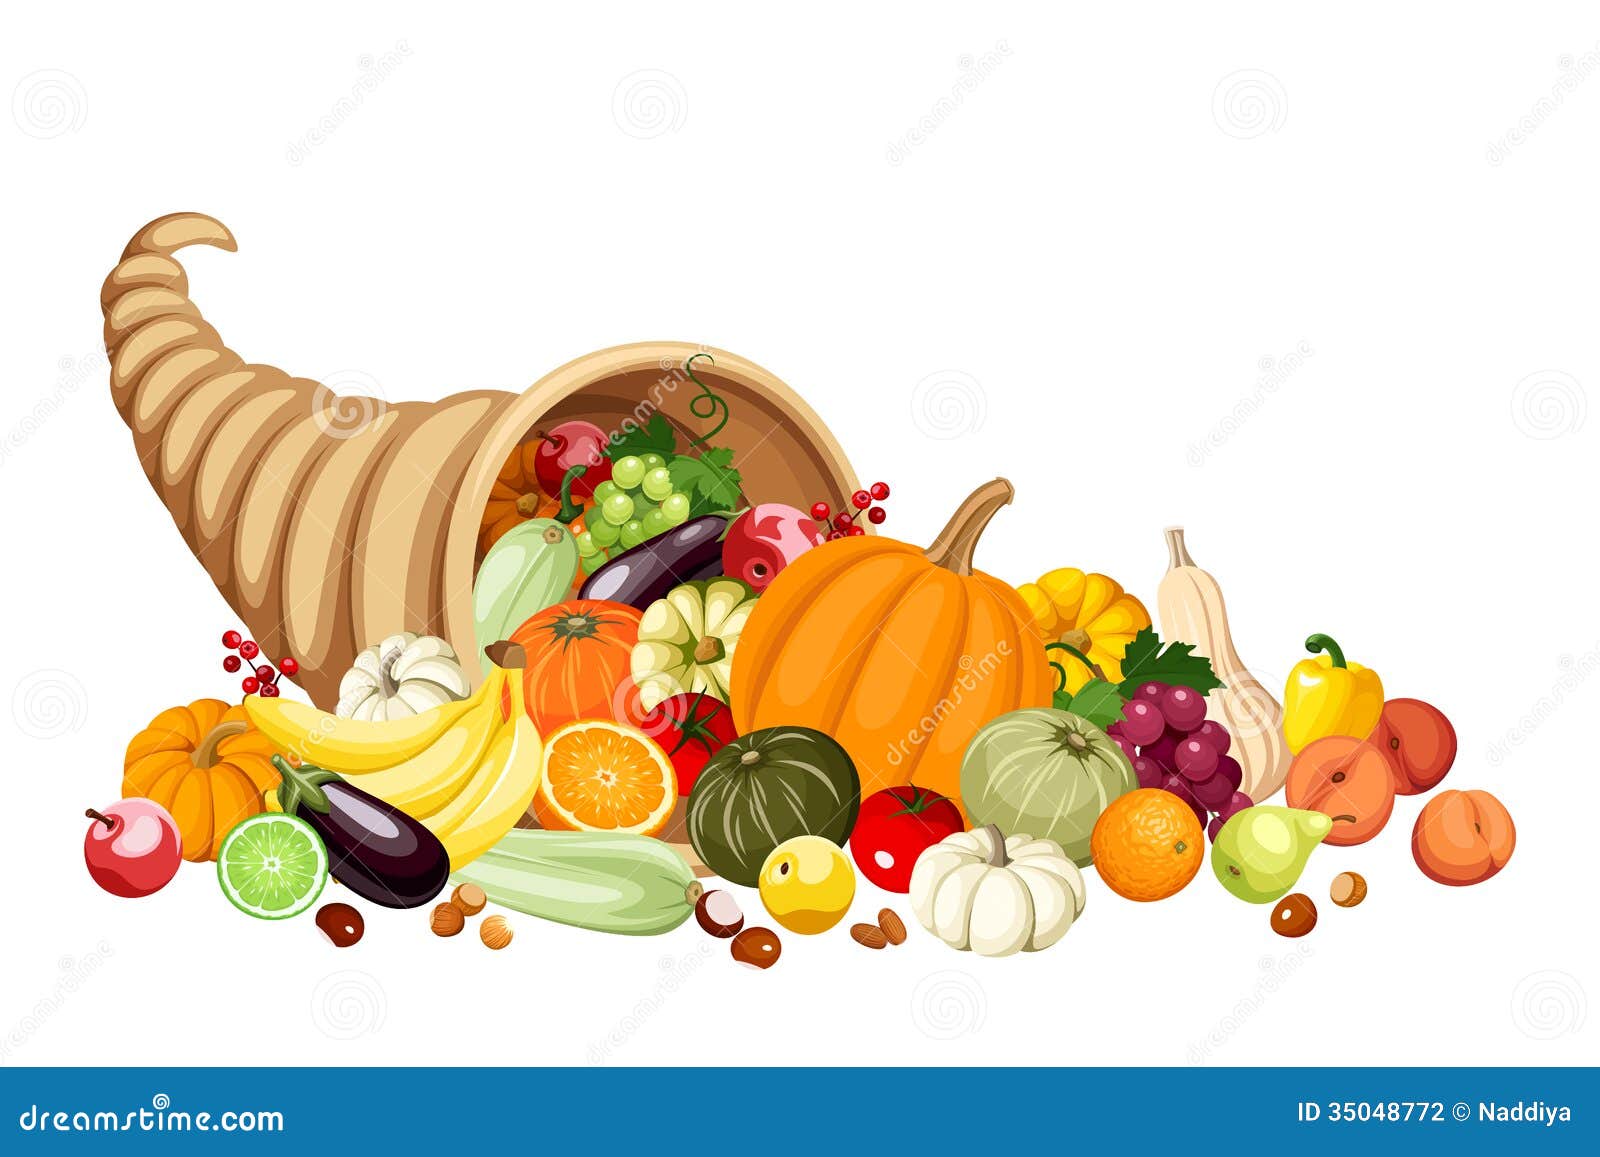 autumn cornucopia (horn of plenty) with fruits and